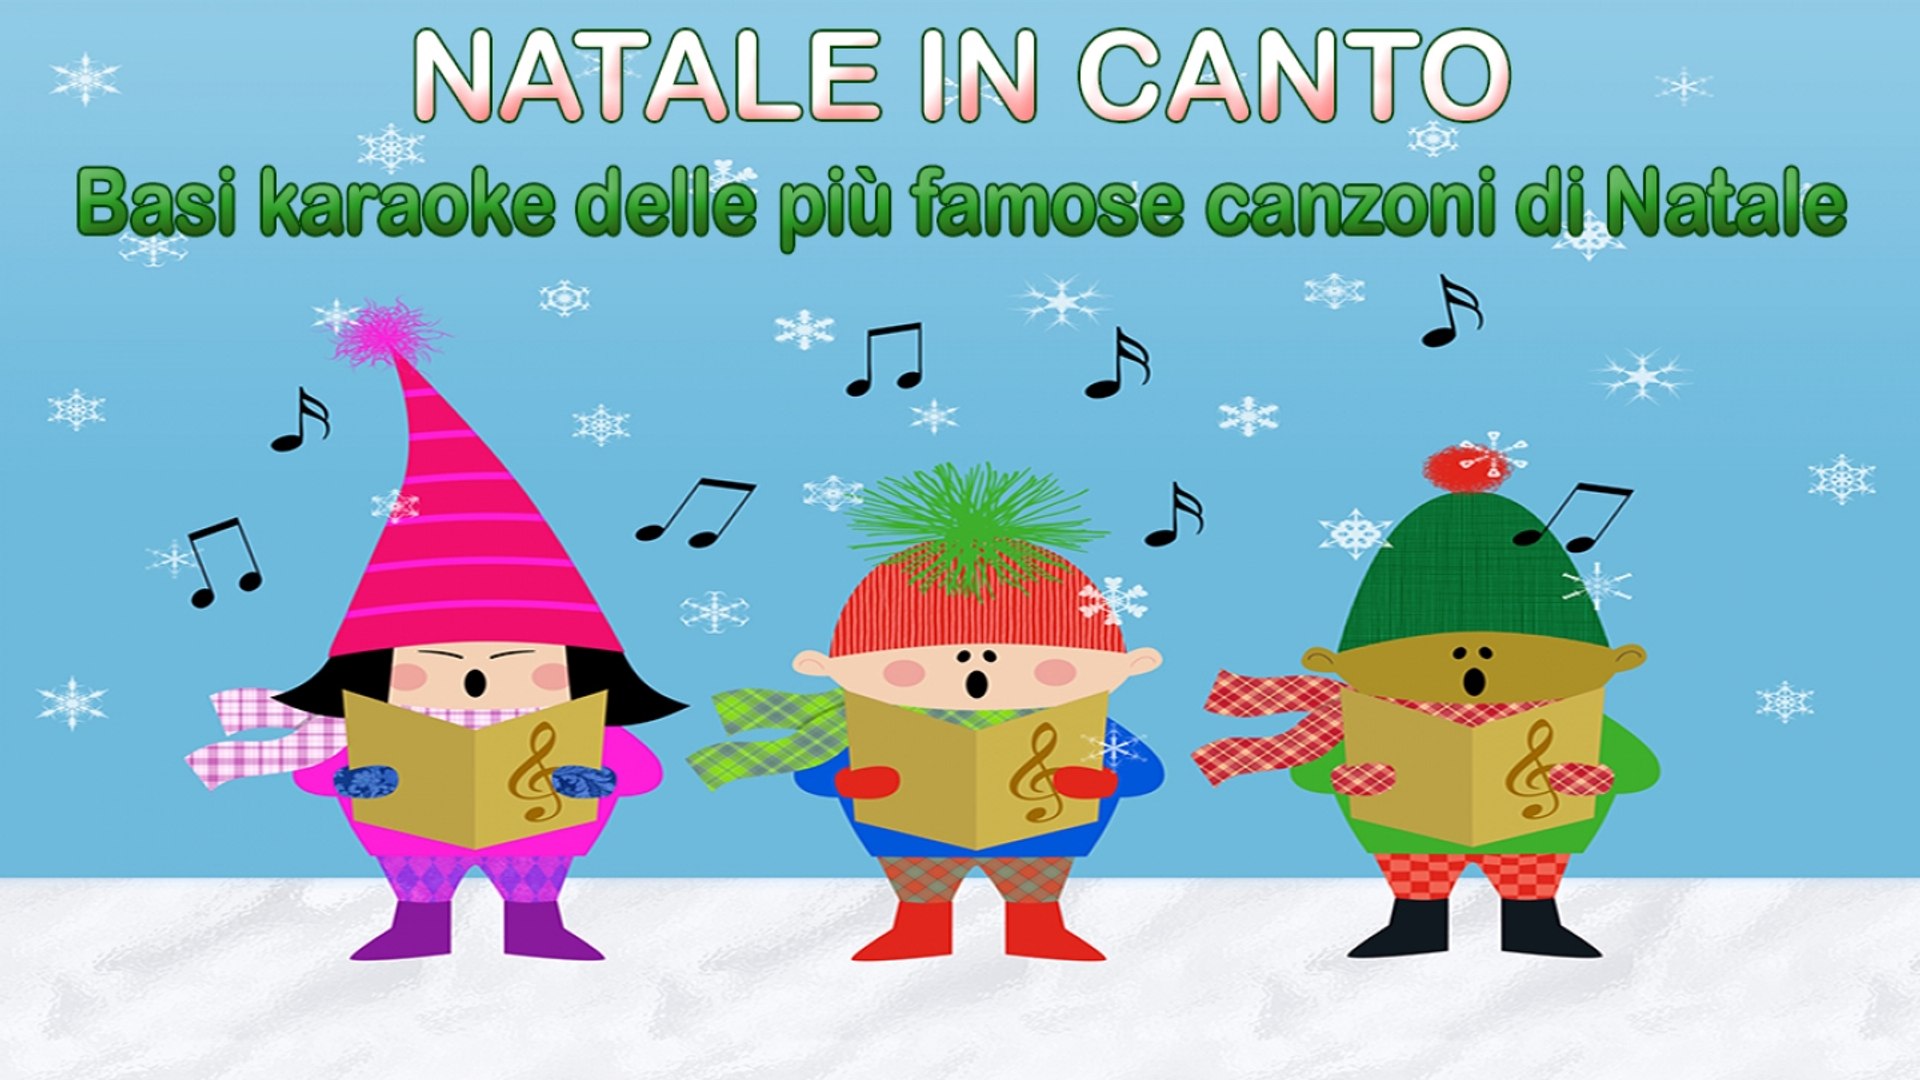 Canzoni Di Natale Karaoke.Va Natale In Canto Basi Karaoke Delle Piu Famose Canzoni Di Natale Canzoni Per Bambini Video Dailymotion